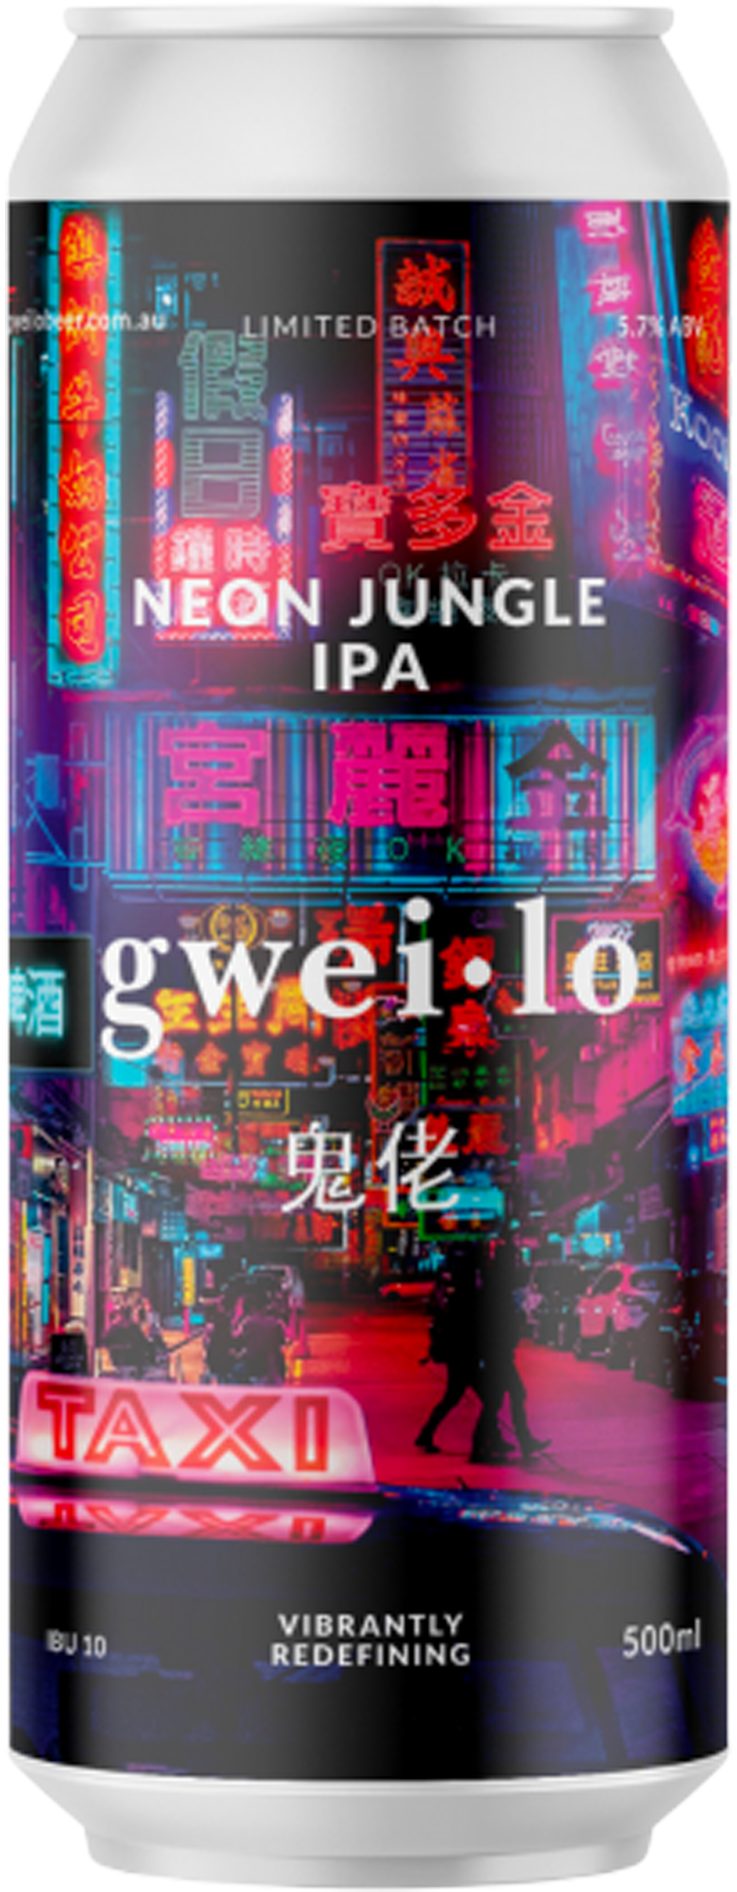 Gweilo Neon Jungle IPA 500ml